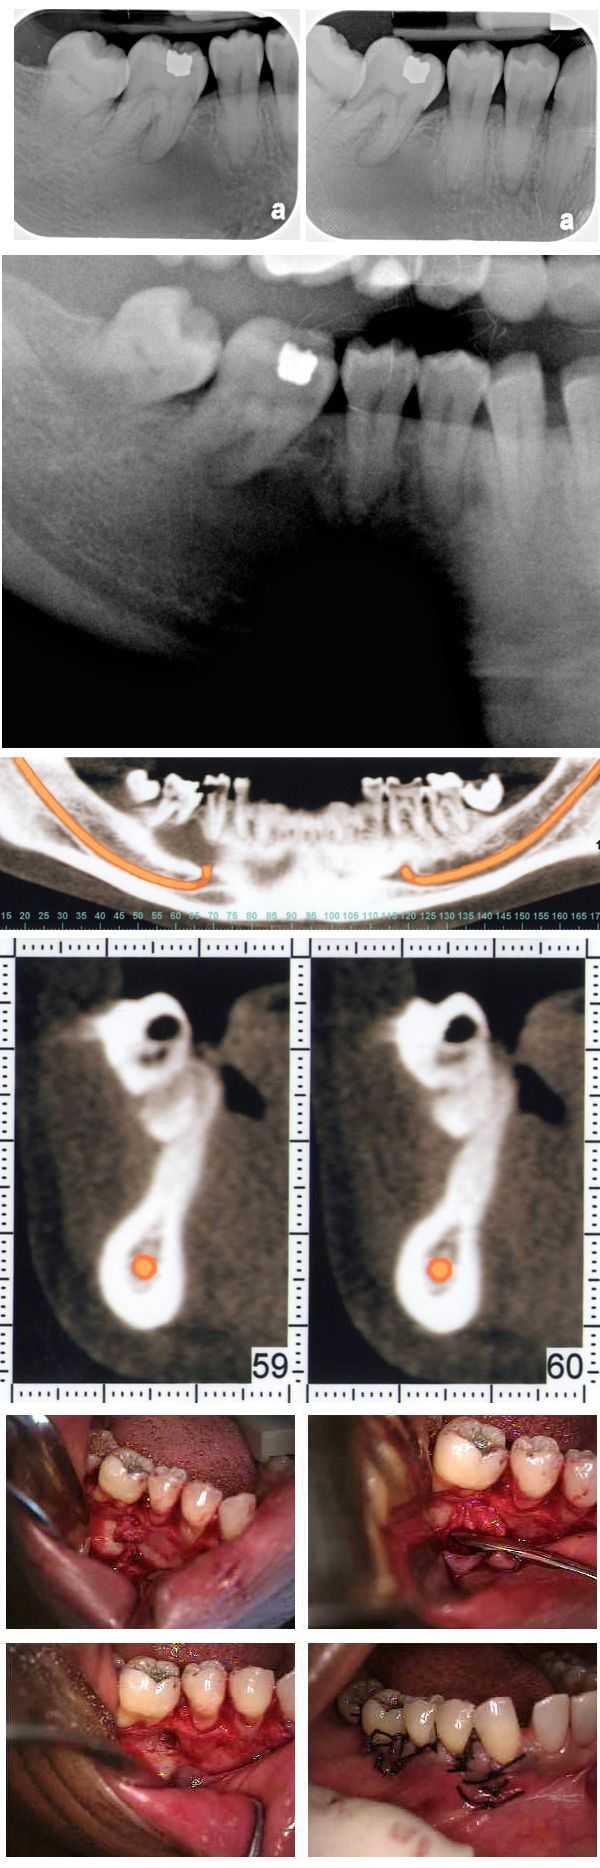 panoramic x-ray xray radiograph dental digital x-rays xrays dental cyst tooth cat scan ct teeth 